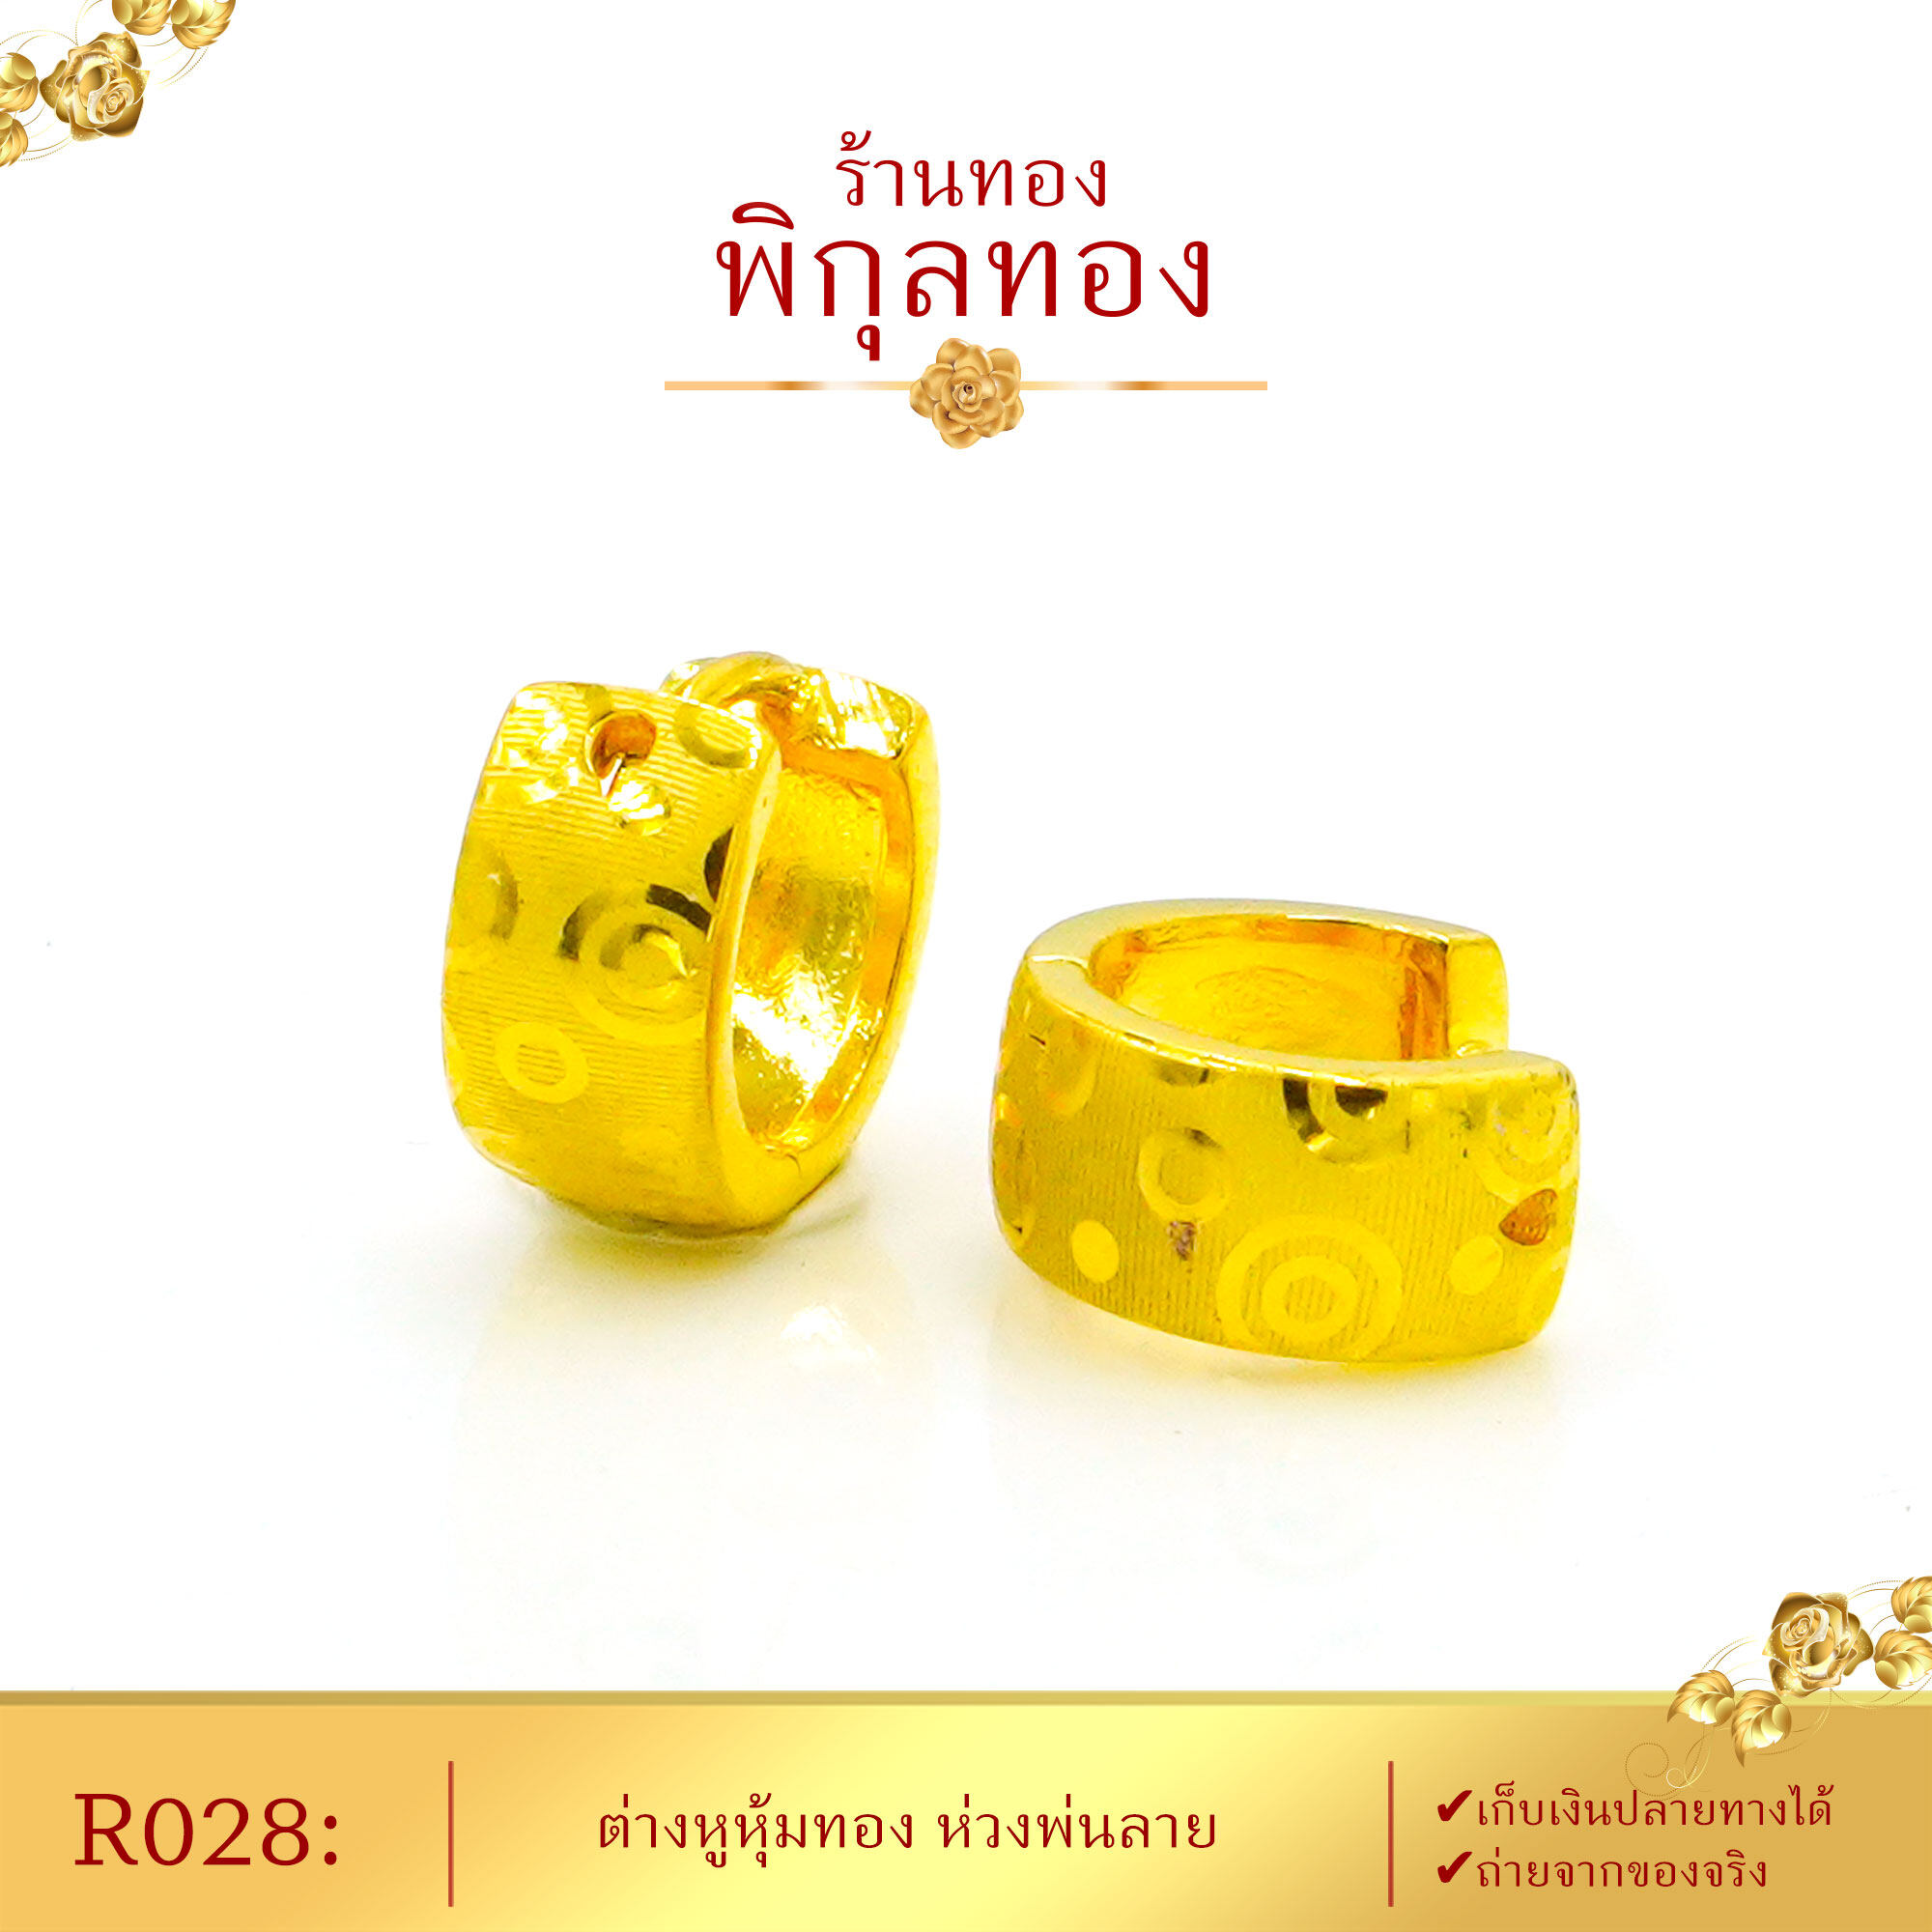 Pikunthong- รุ่น R028 ต่างหู ต่างหูทอง ต่างหูหุ้มทองแท้ ตุ้มหูทอง ขาล็อค (ต่างหูทองหุ้ม เกรดพิเศษ) ร้าน พิกุลทอง